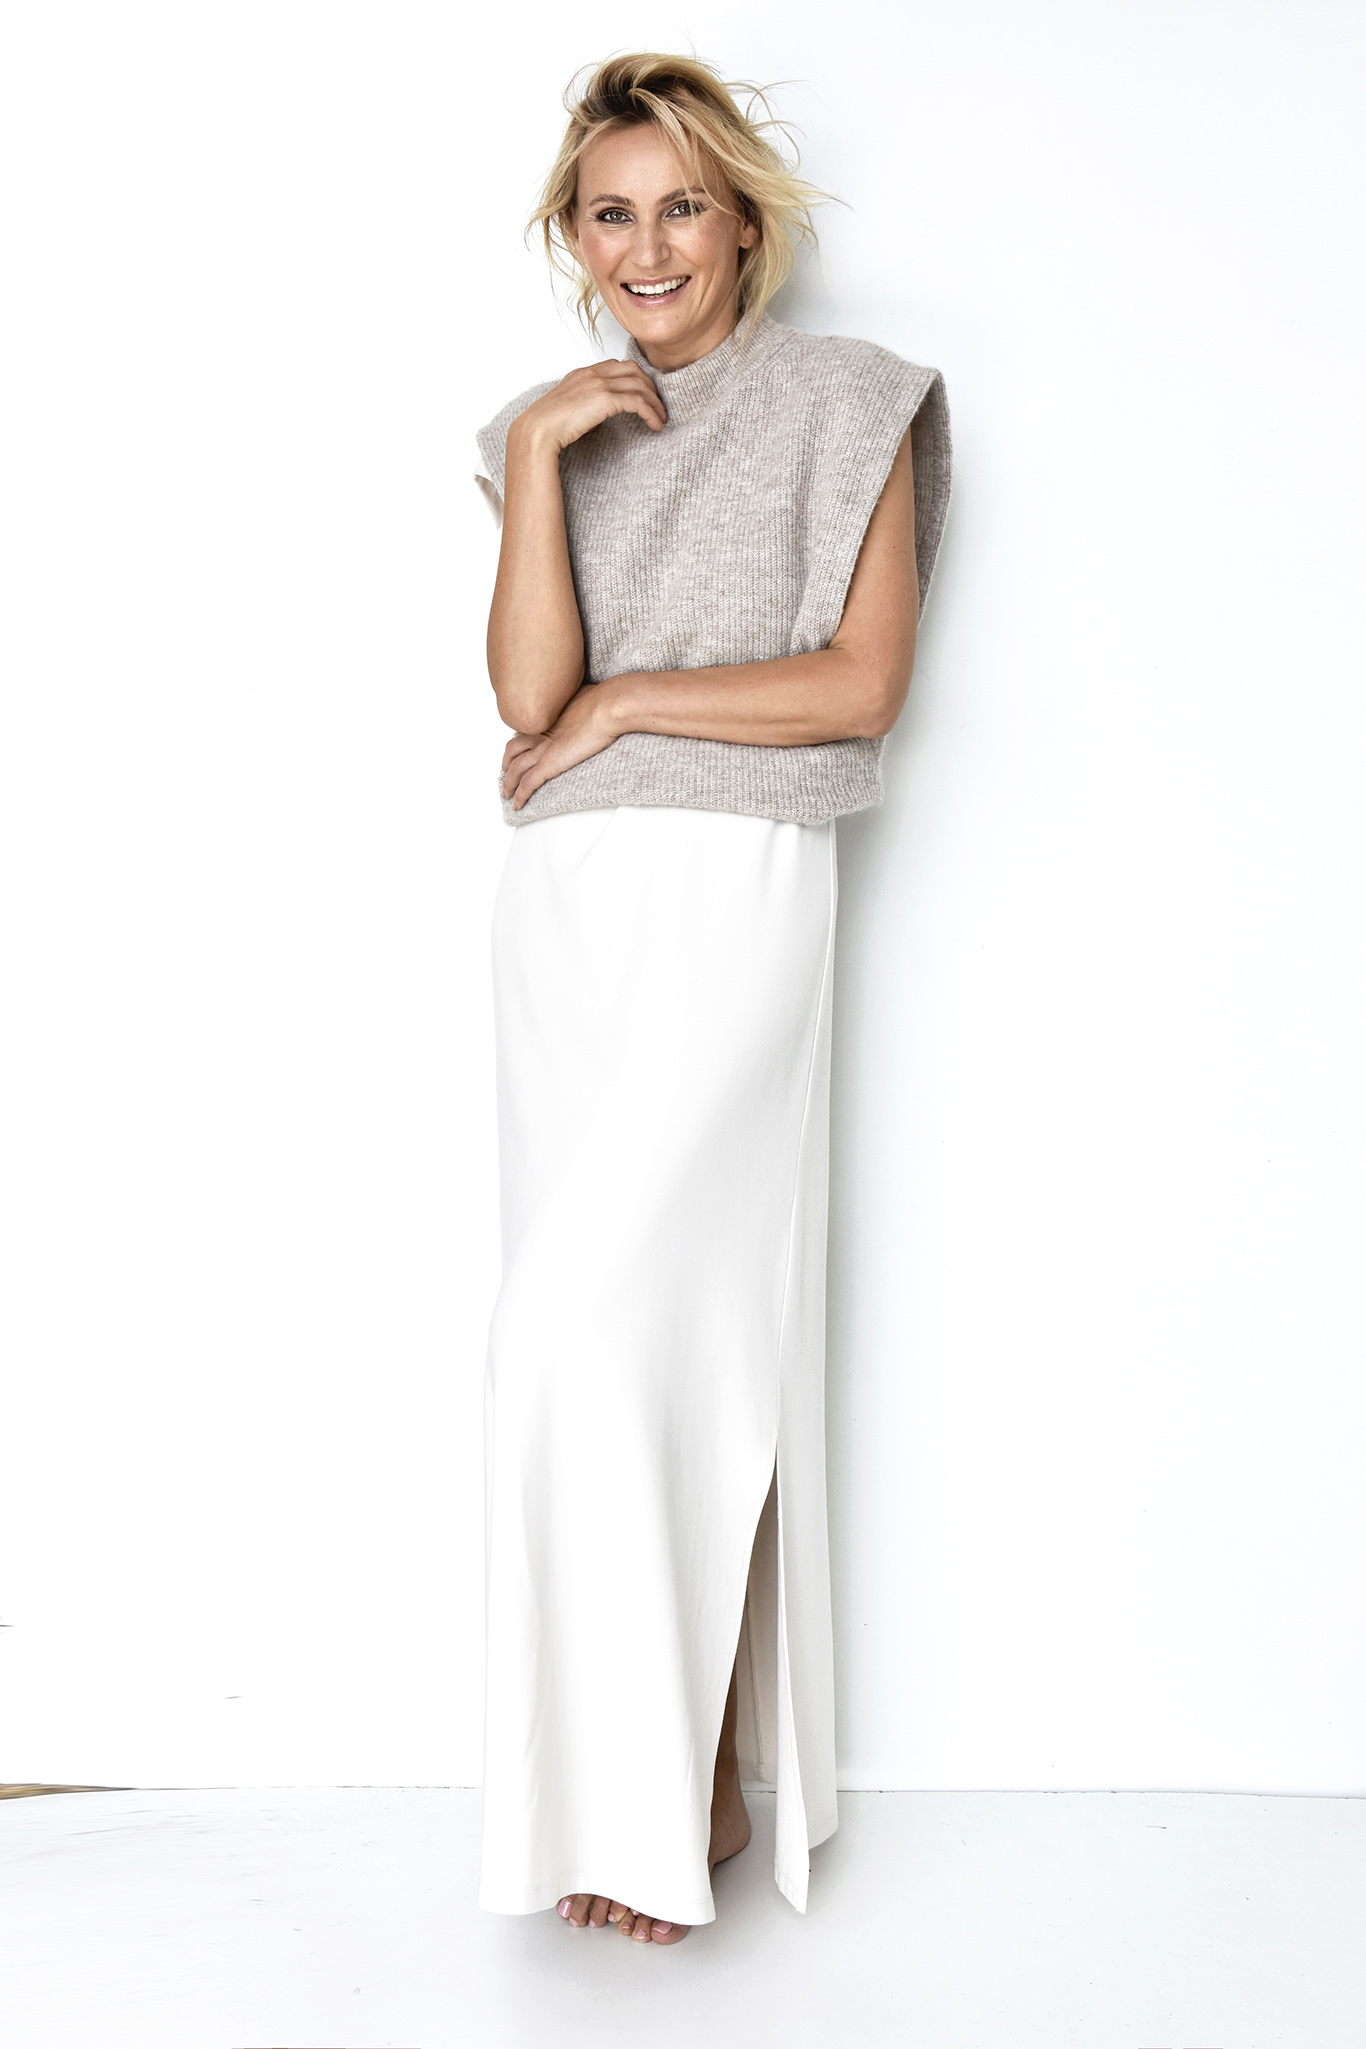 Model Iryna Preuss - Portfolio Fashion, Bild 0006